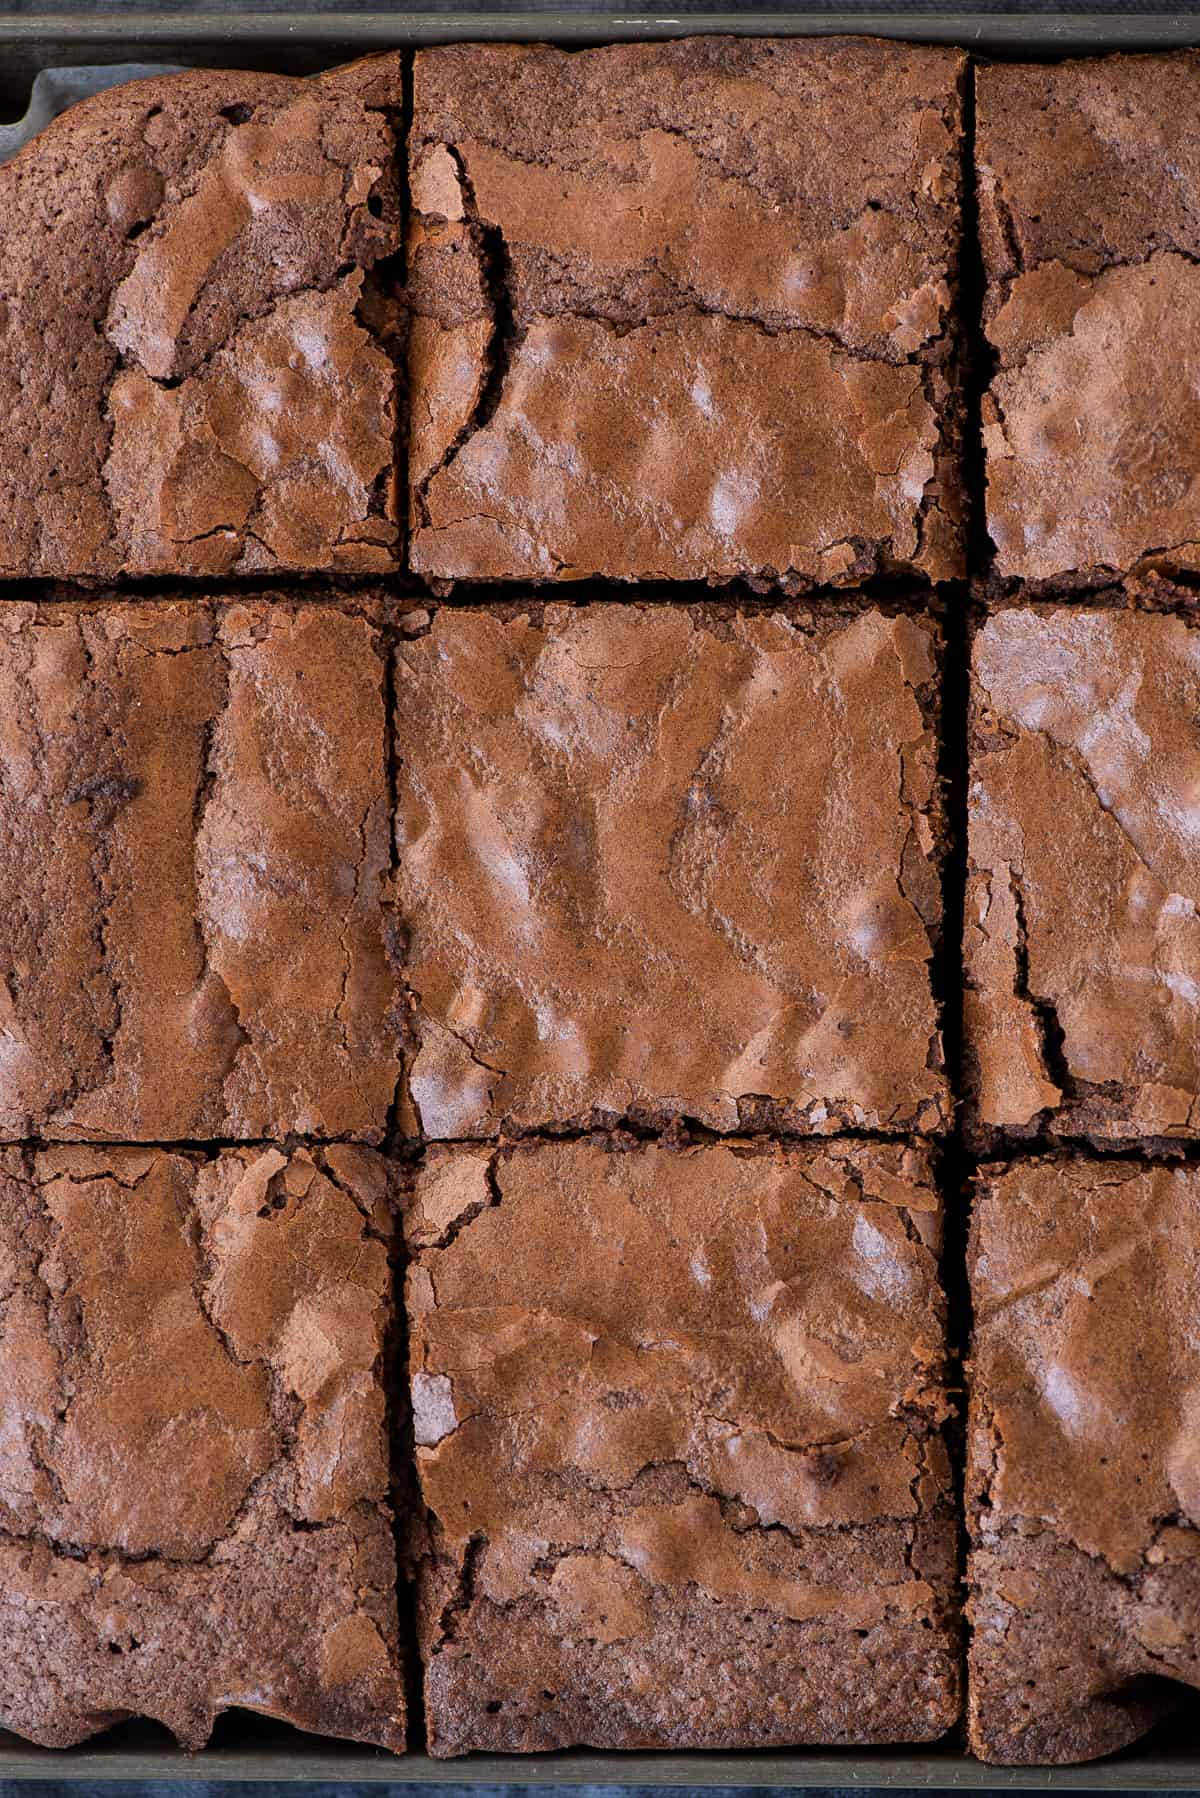 brownies cut into squares in baking pan